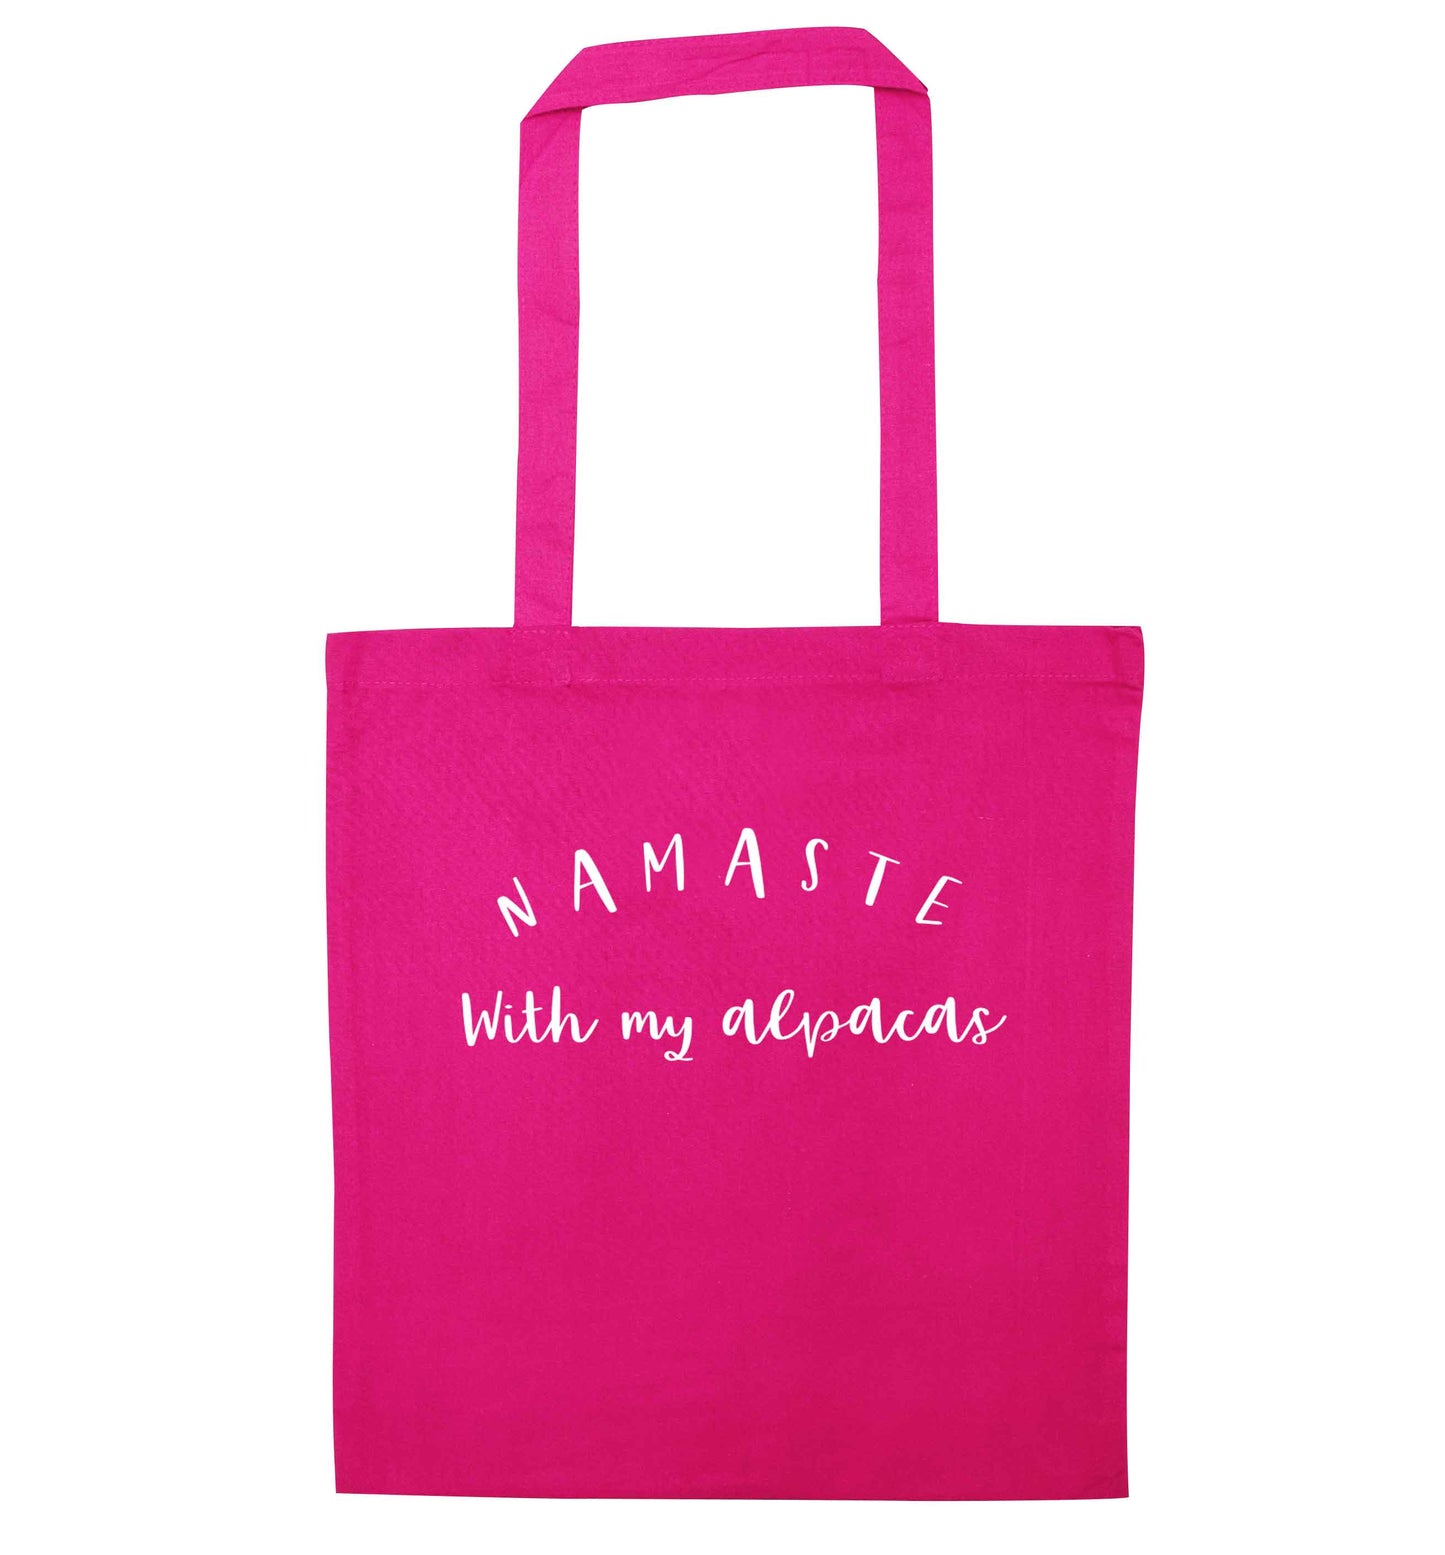 Namaste with my alpacas pink tote bag